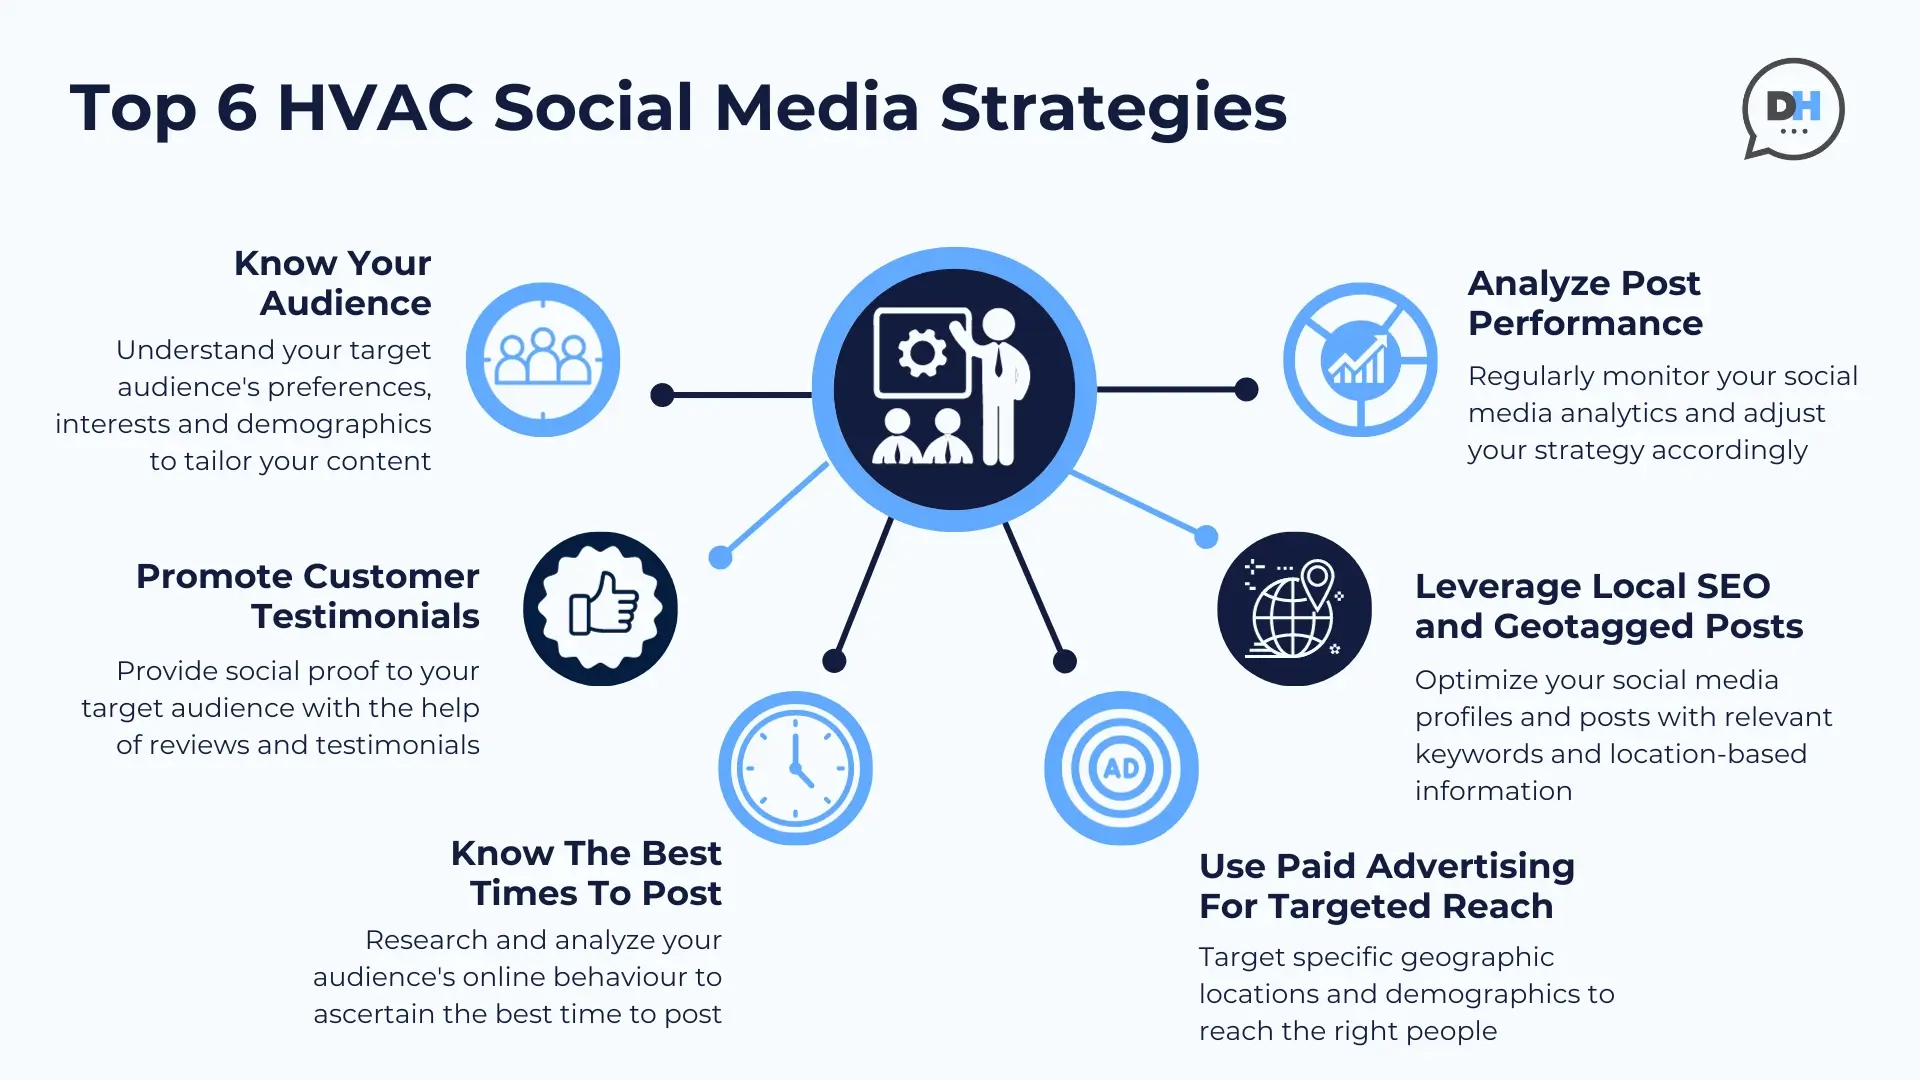 Top 6 HVAC Social Media Strategies